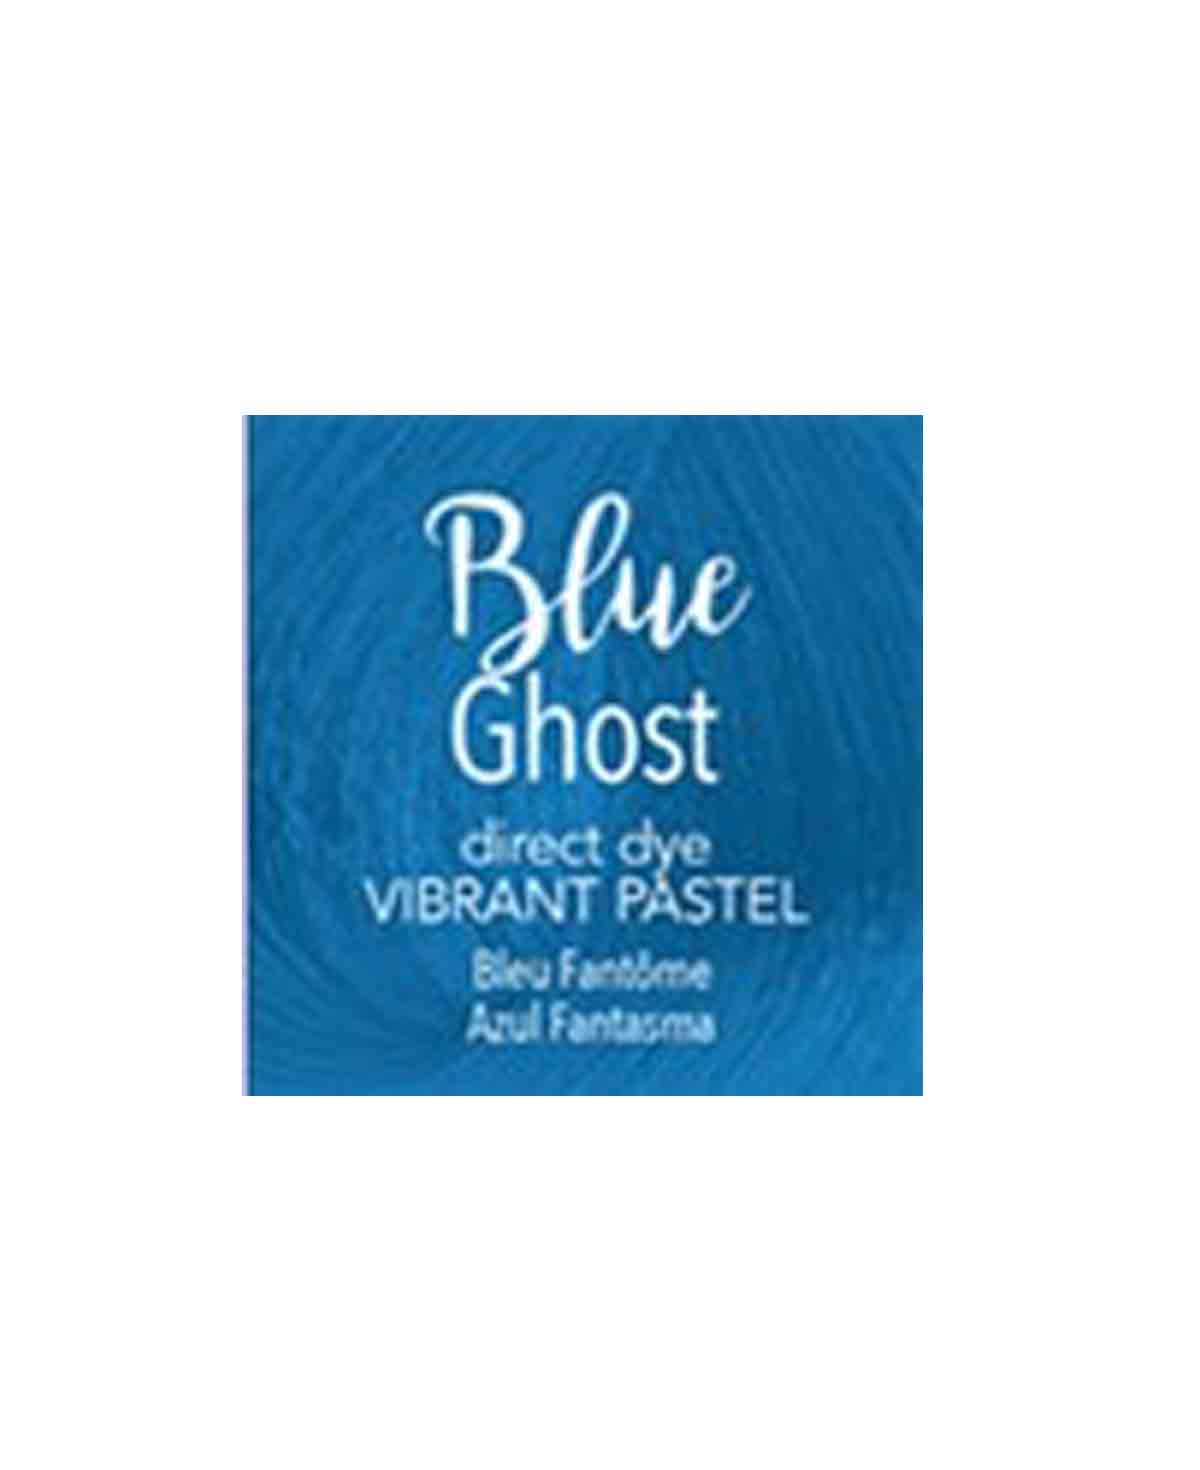 Mydentity - Pastel Blue Ghost